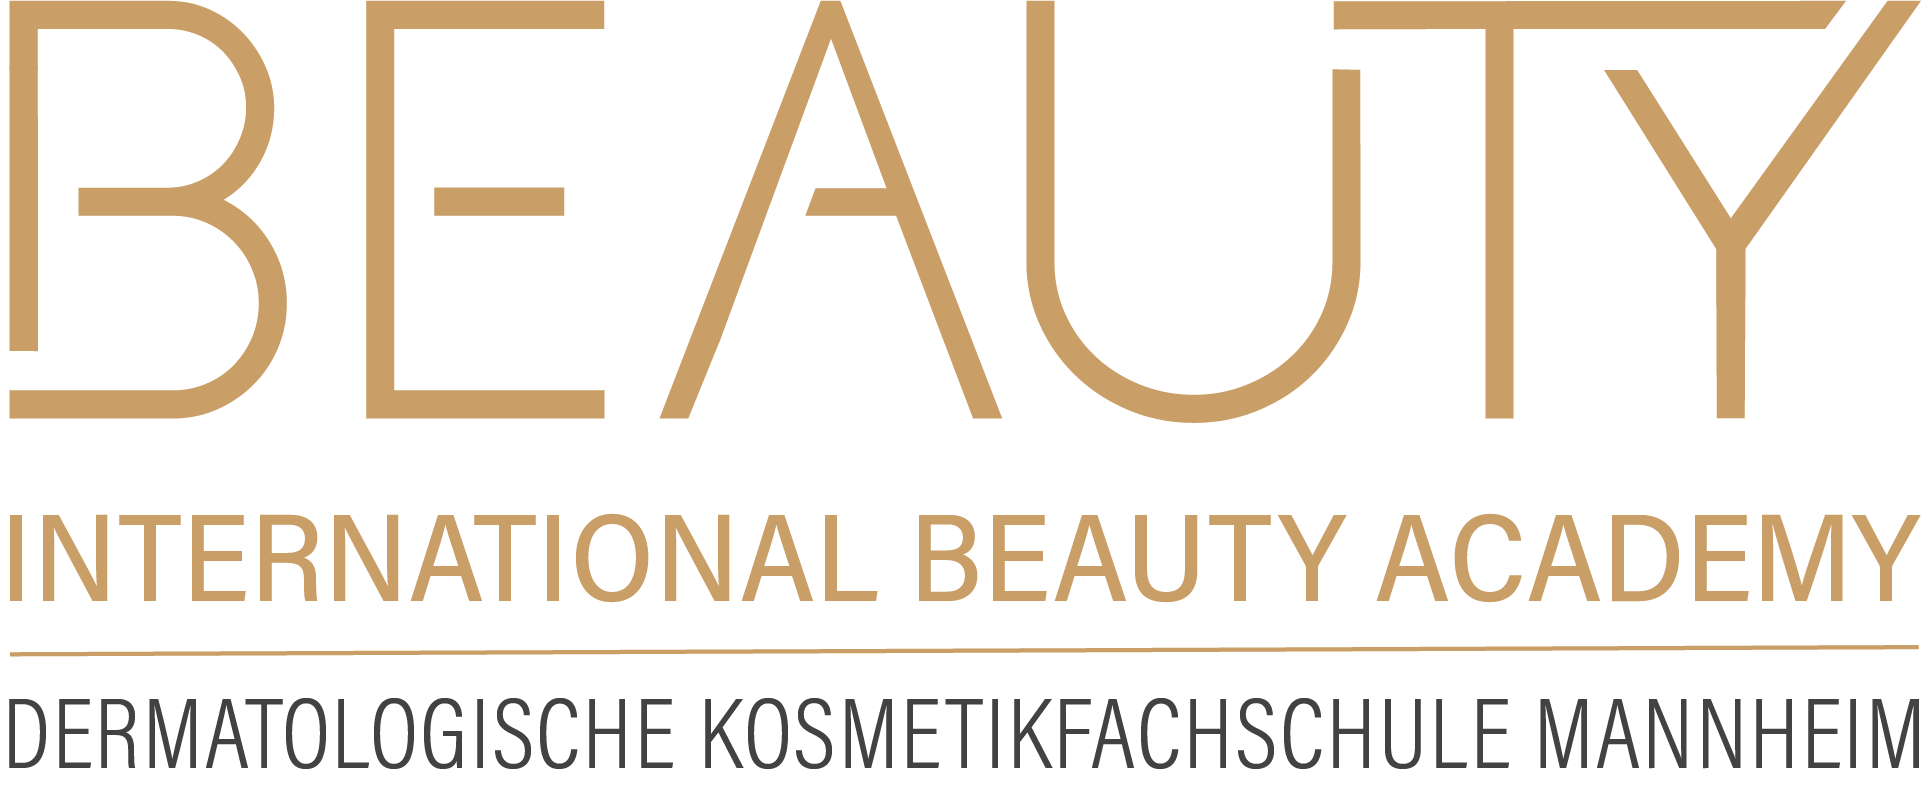 International Beauty Academy